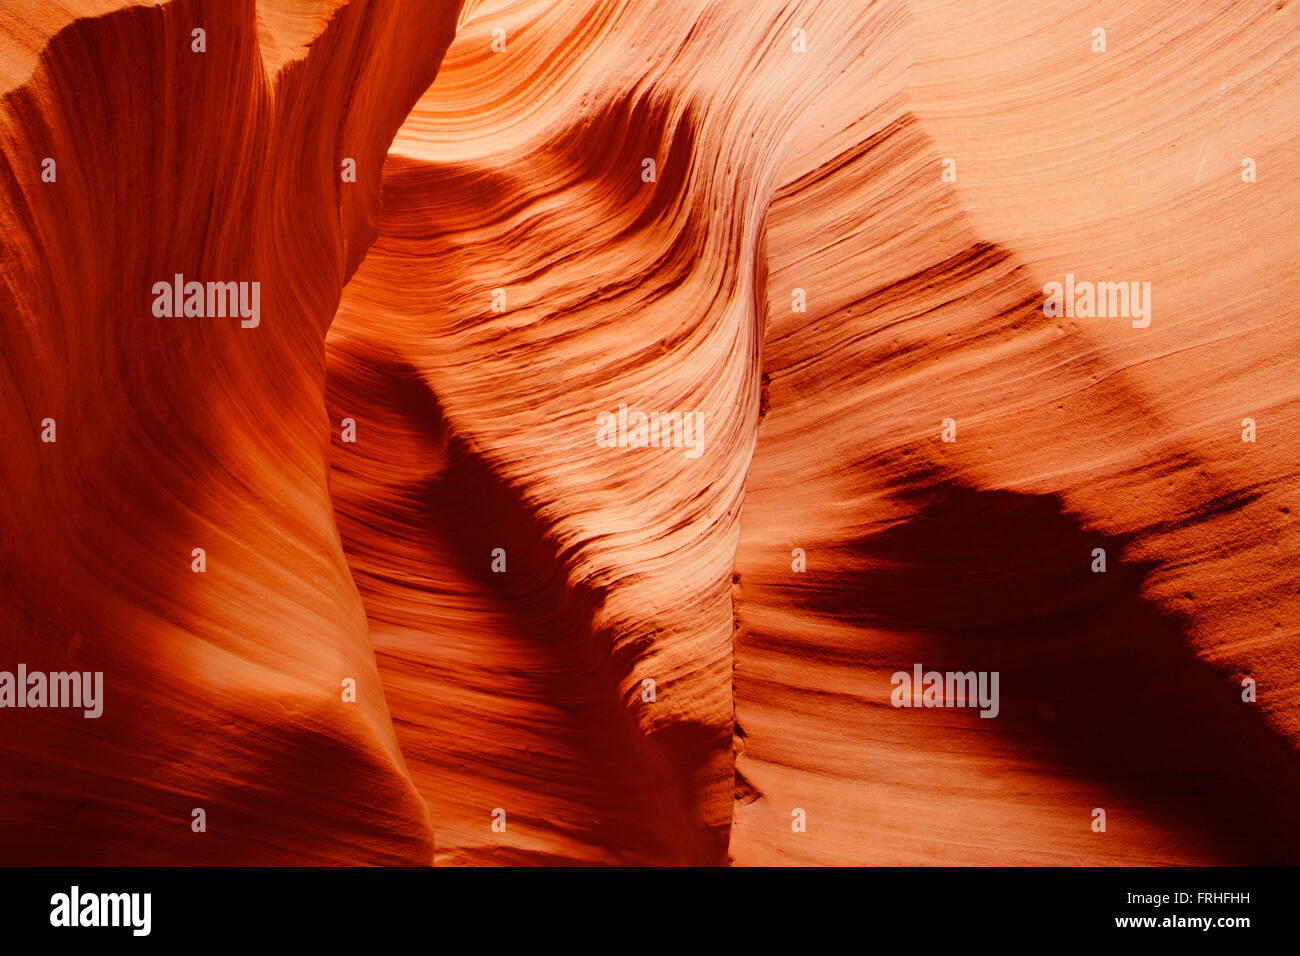 Sandstone waves and colors inside iconic Antelope Canyon, Arizona Stock Photo